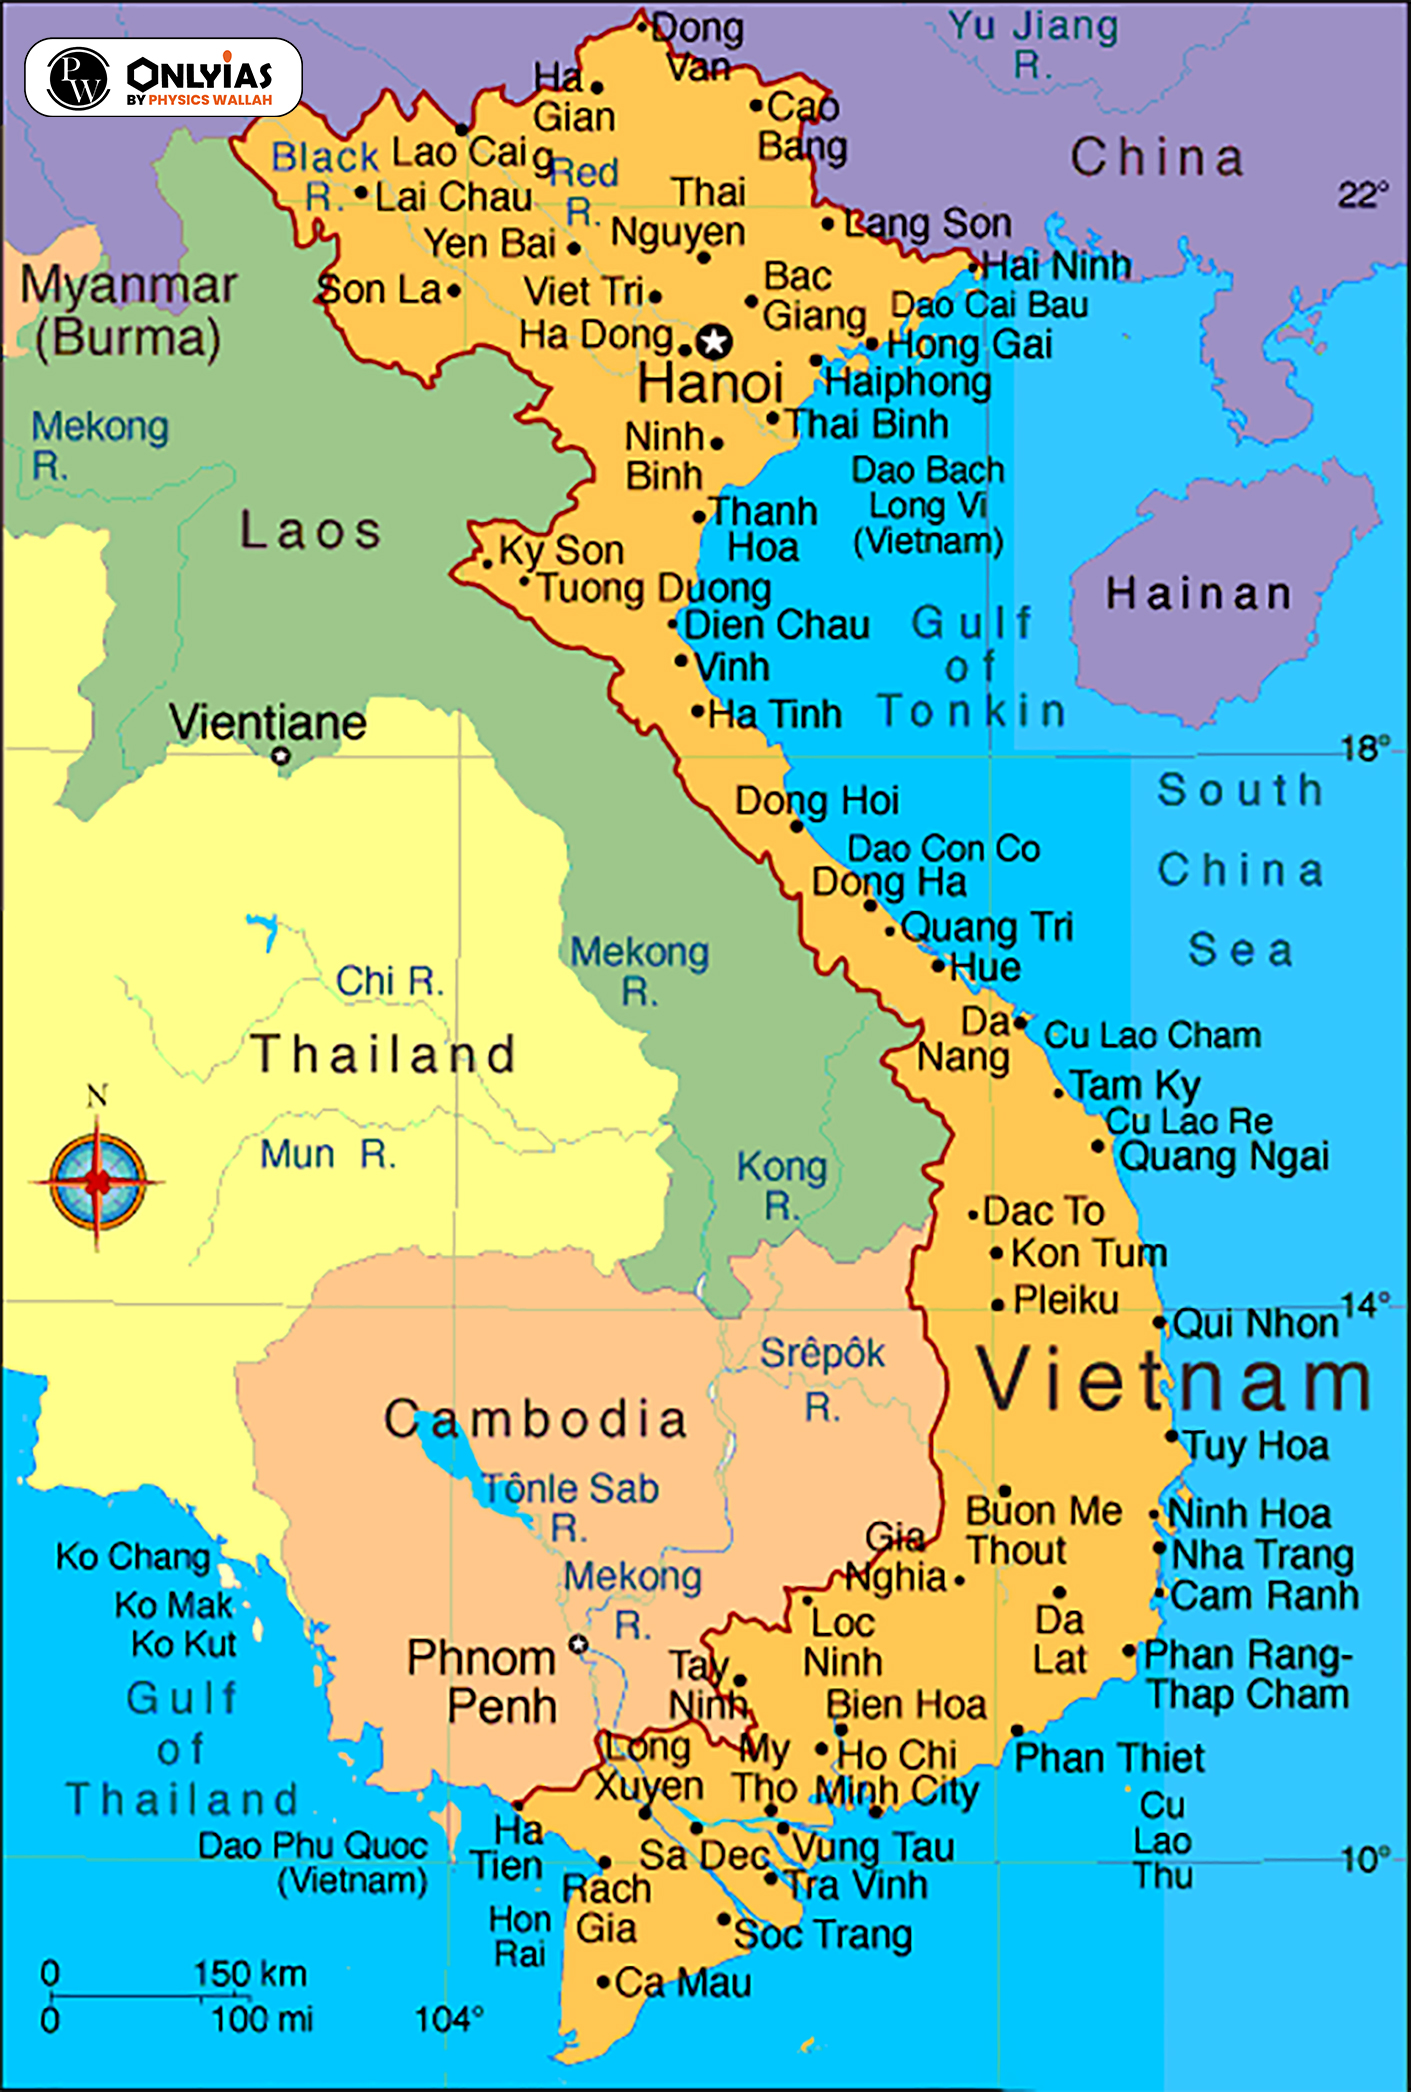 India and Vietnam